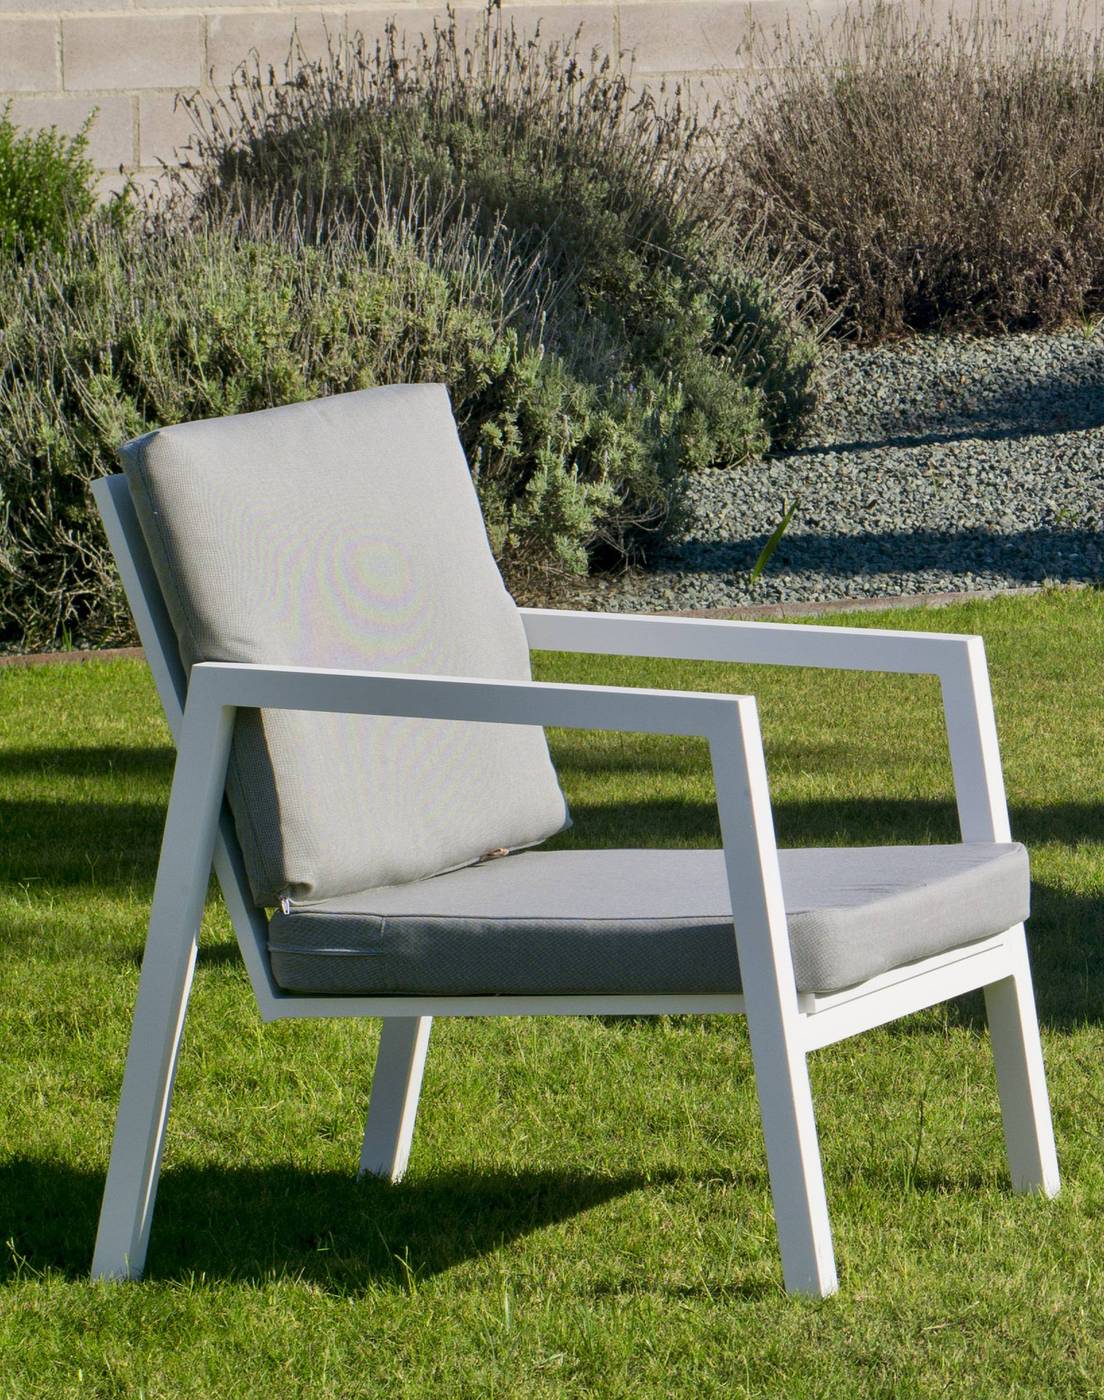 Set Aluminio Ágata-7 - Conjunto de aluminio apilable: 1 sofá de 2 plazas + 2 sillones + 1 mesa de centro + cojines. Disponible en color blanco, plata o antracita.